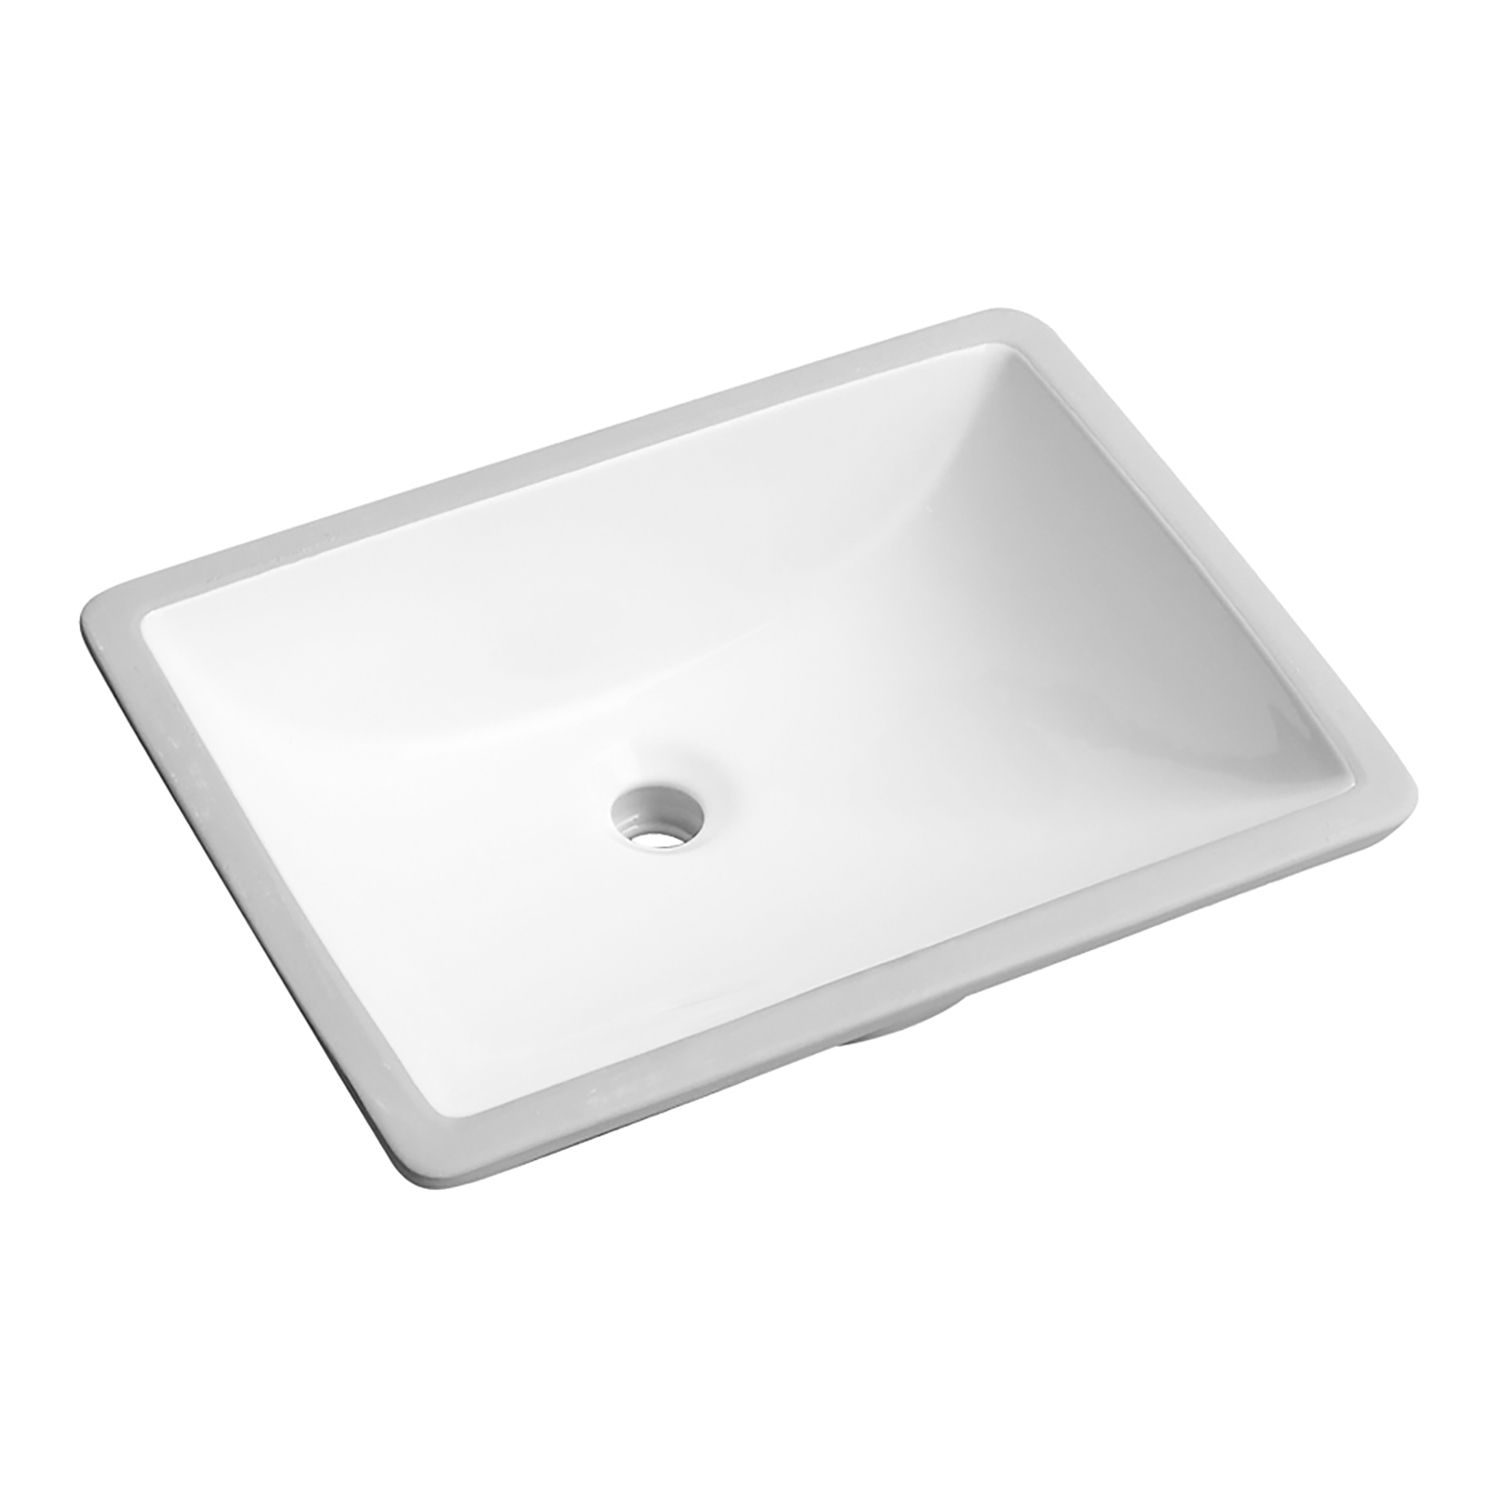 C2020 20" x 15" White Square Ceramic Undermount Bathroom Vanity Vessel Sink